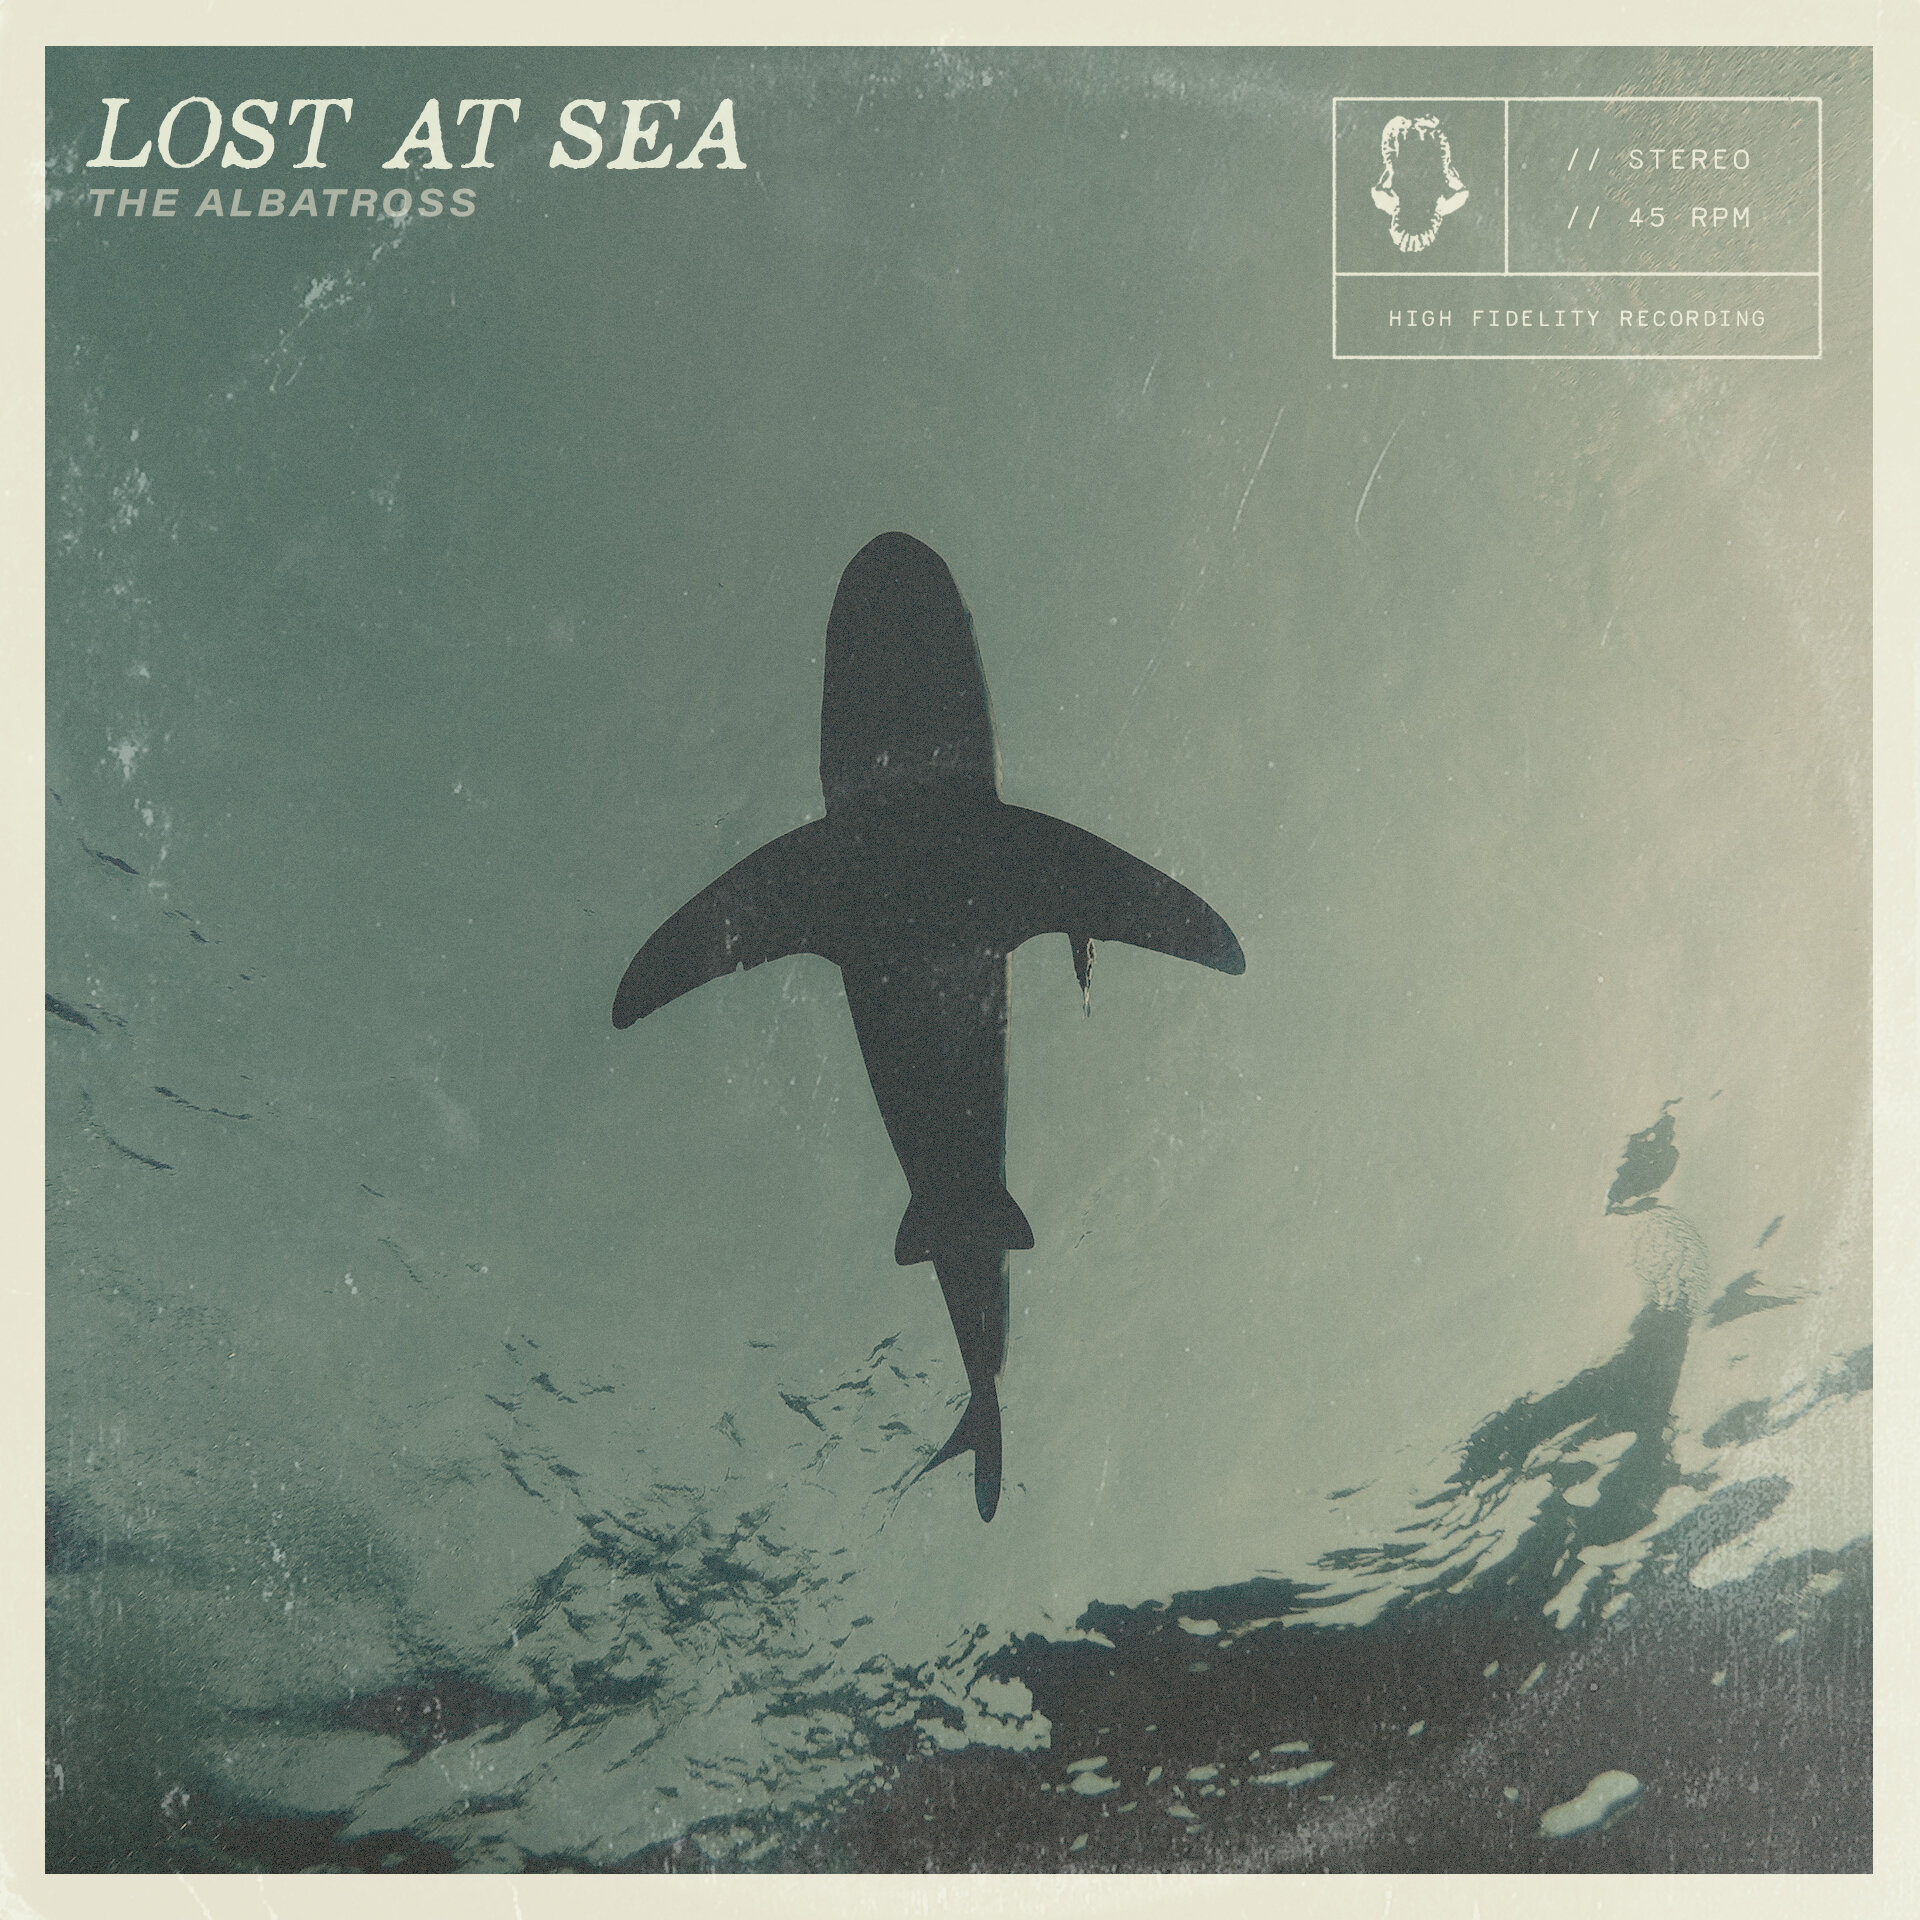 Lost At Sea - "The Albatross"